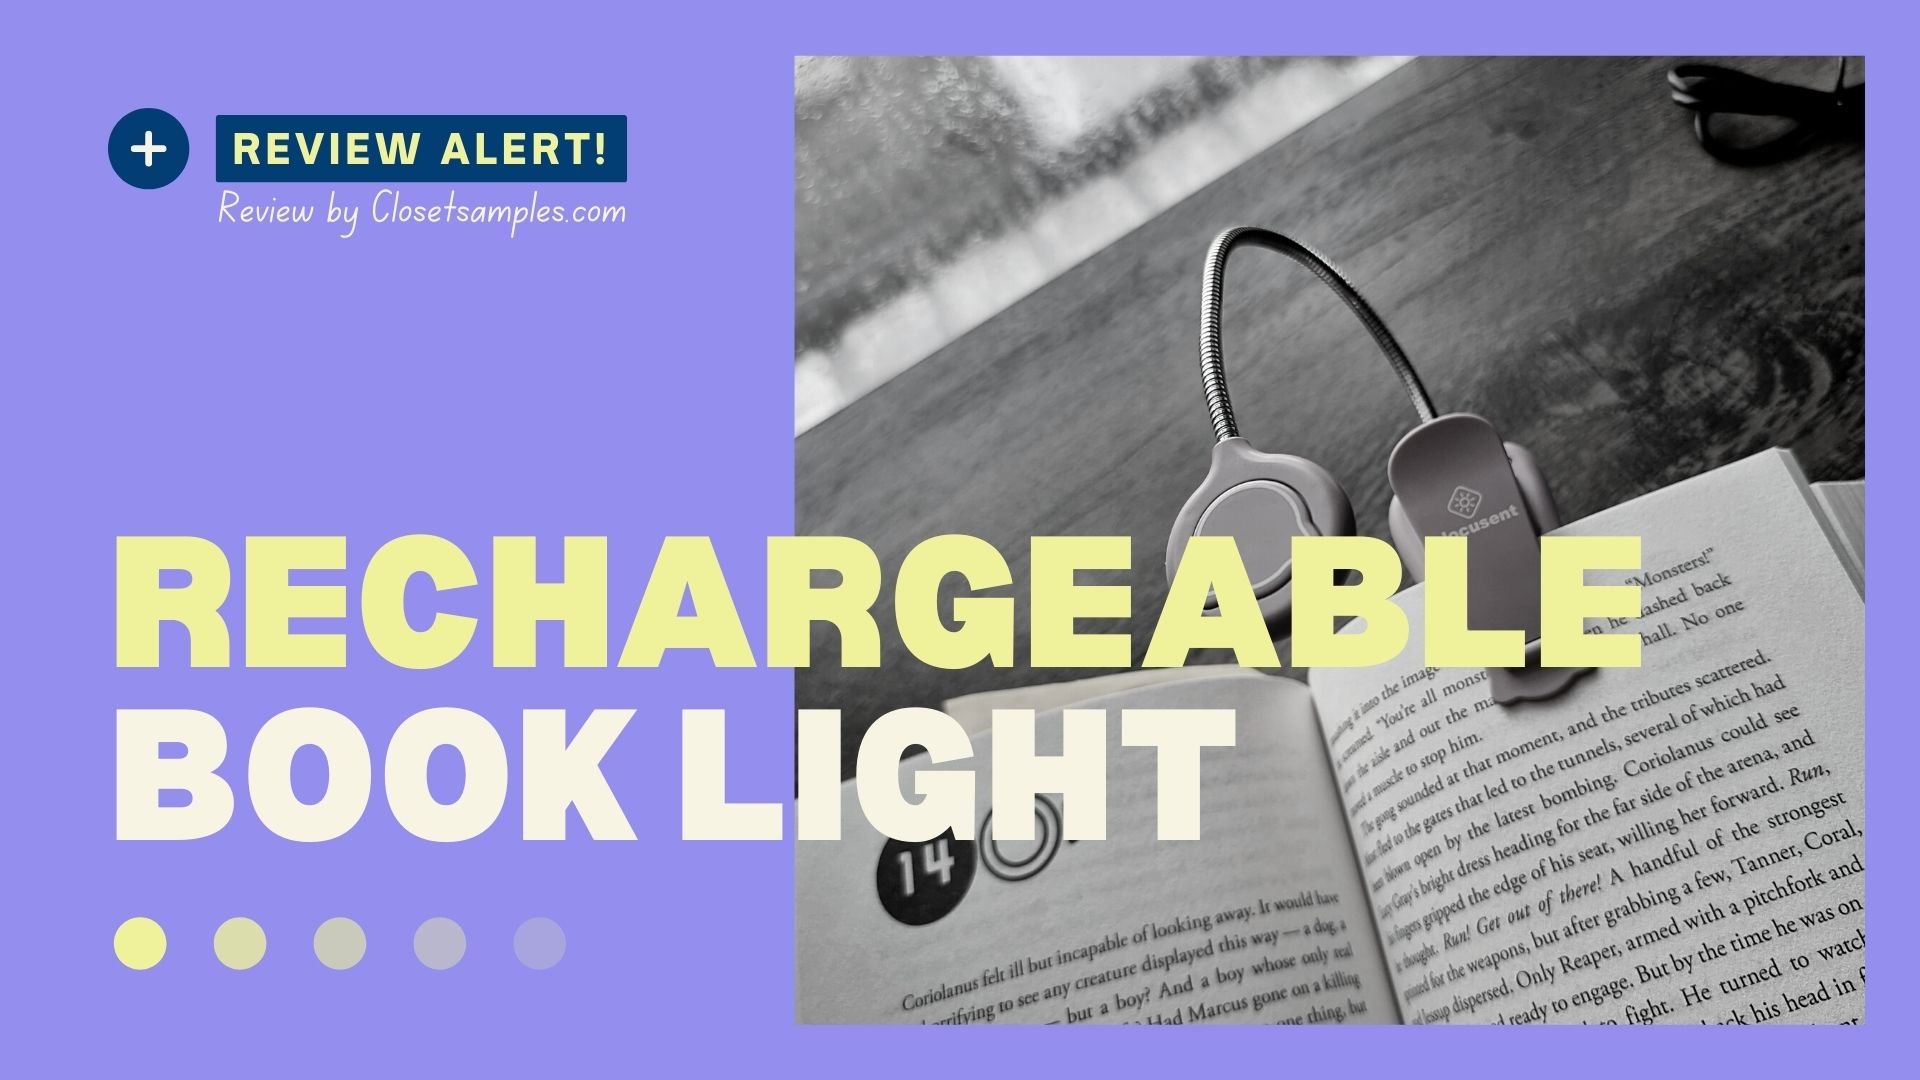 Glocusent 16 LED Rechargeable Book Light Review closetsamples